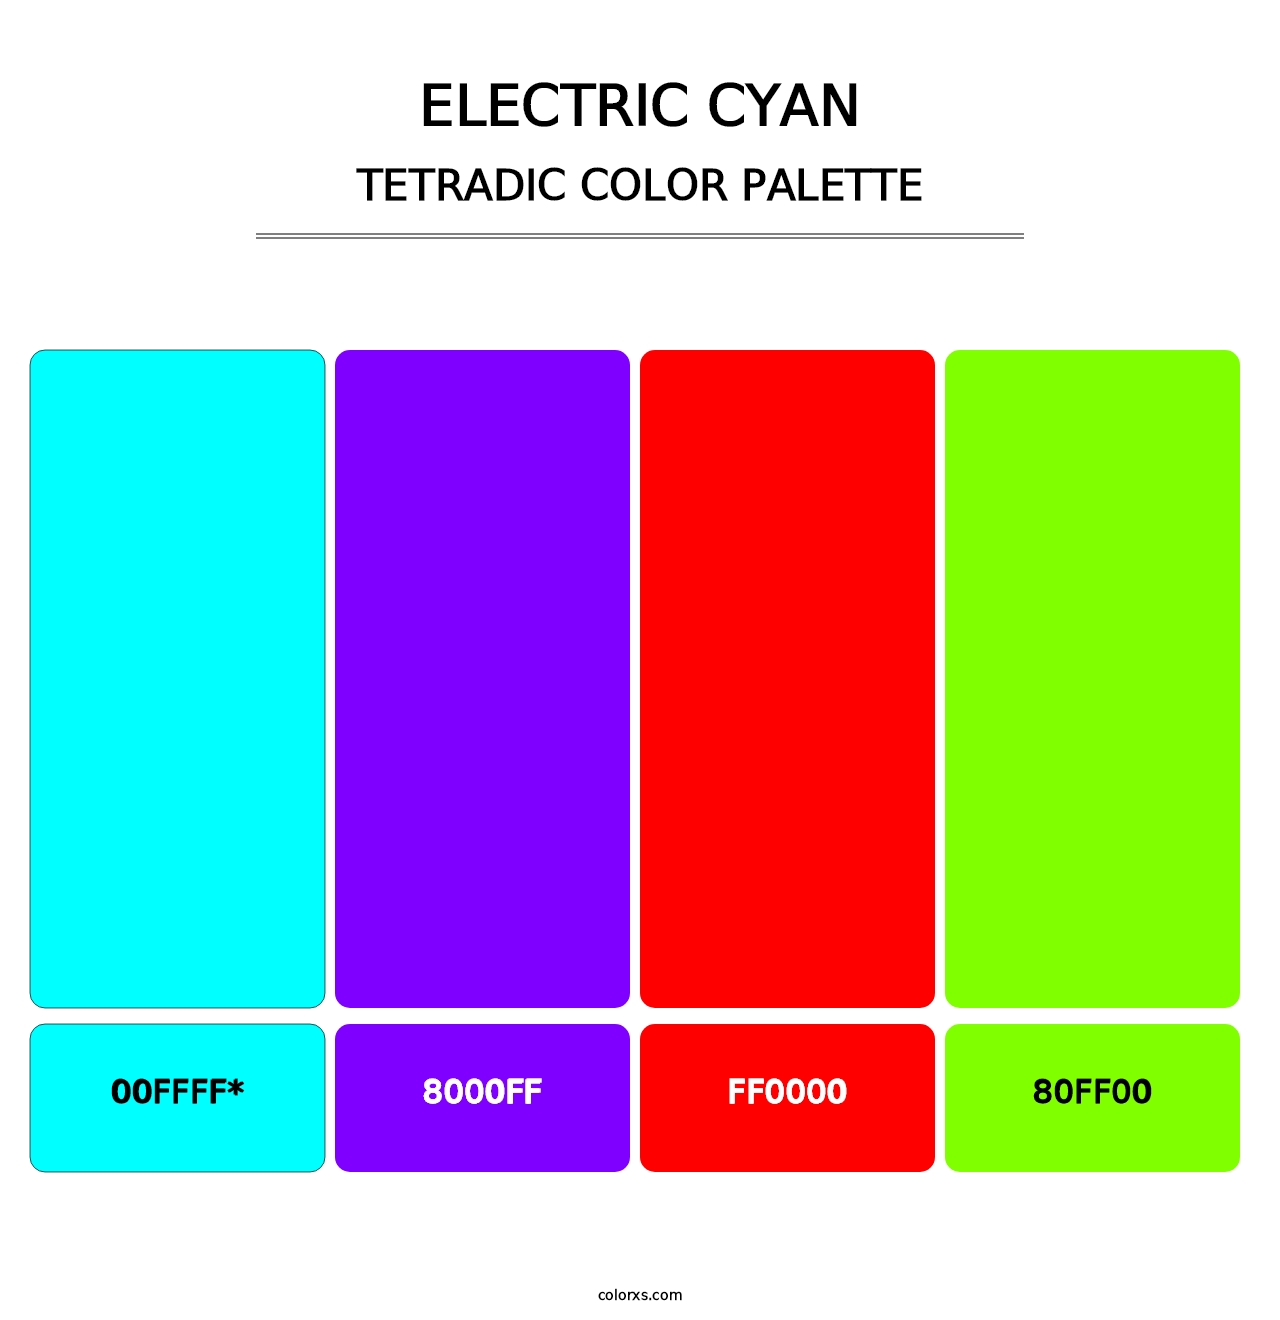 Electric Cyan - Tetradic Color Palette